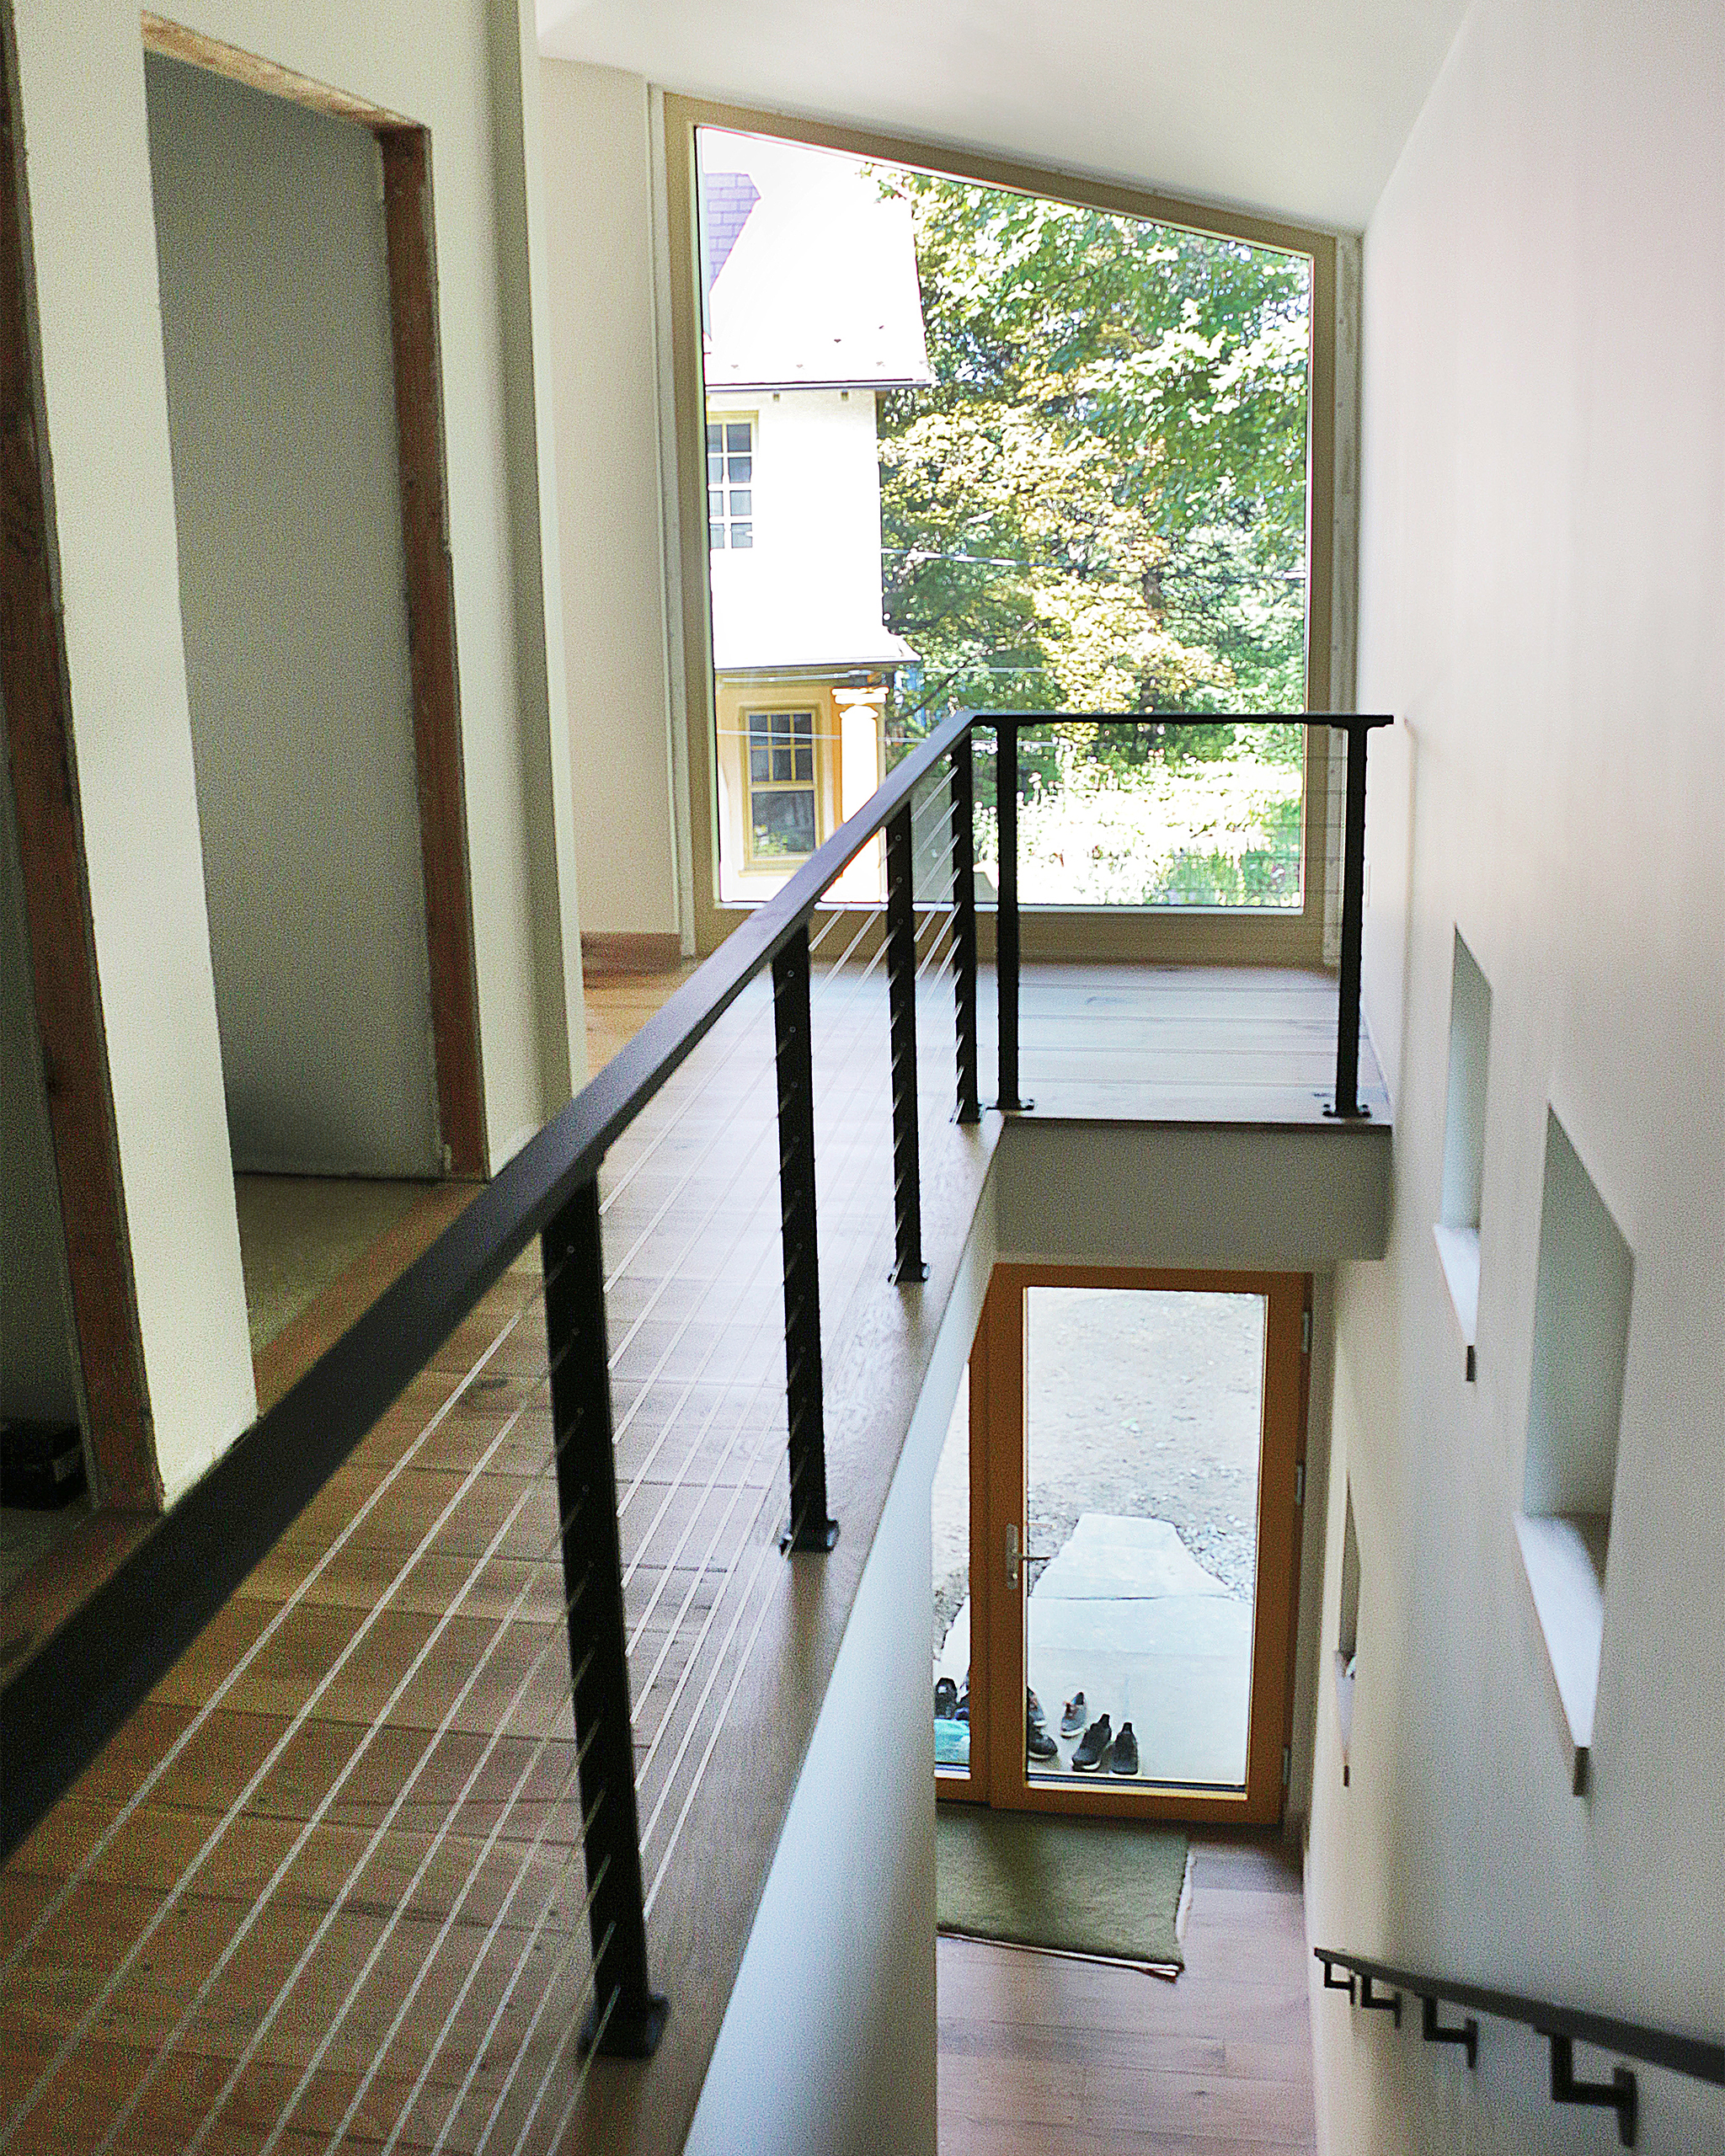 Ellman-Raiselis Passive House hallway and stairwell